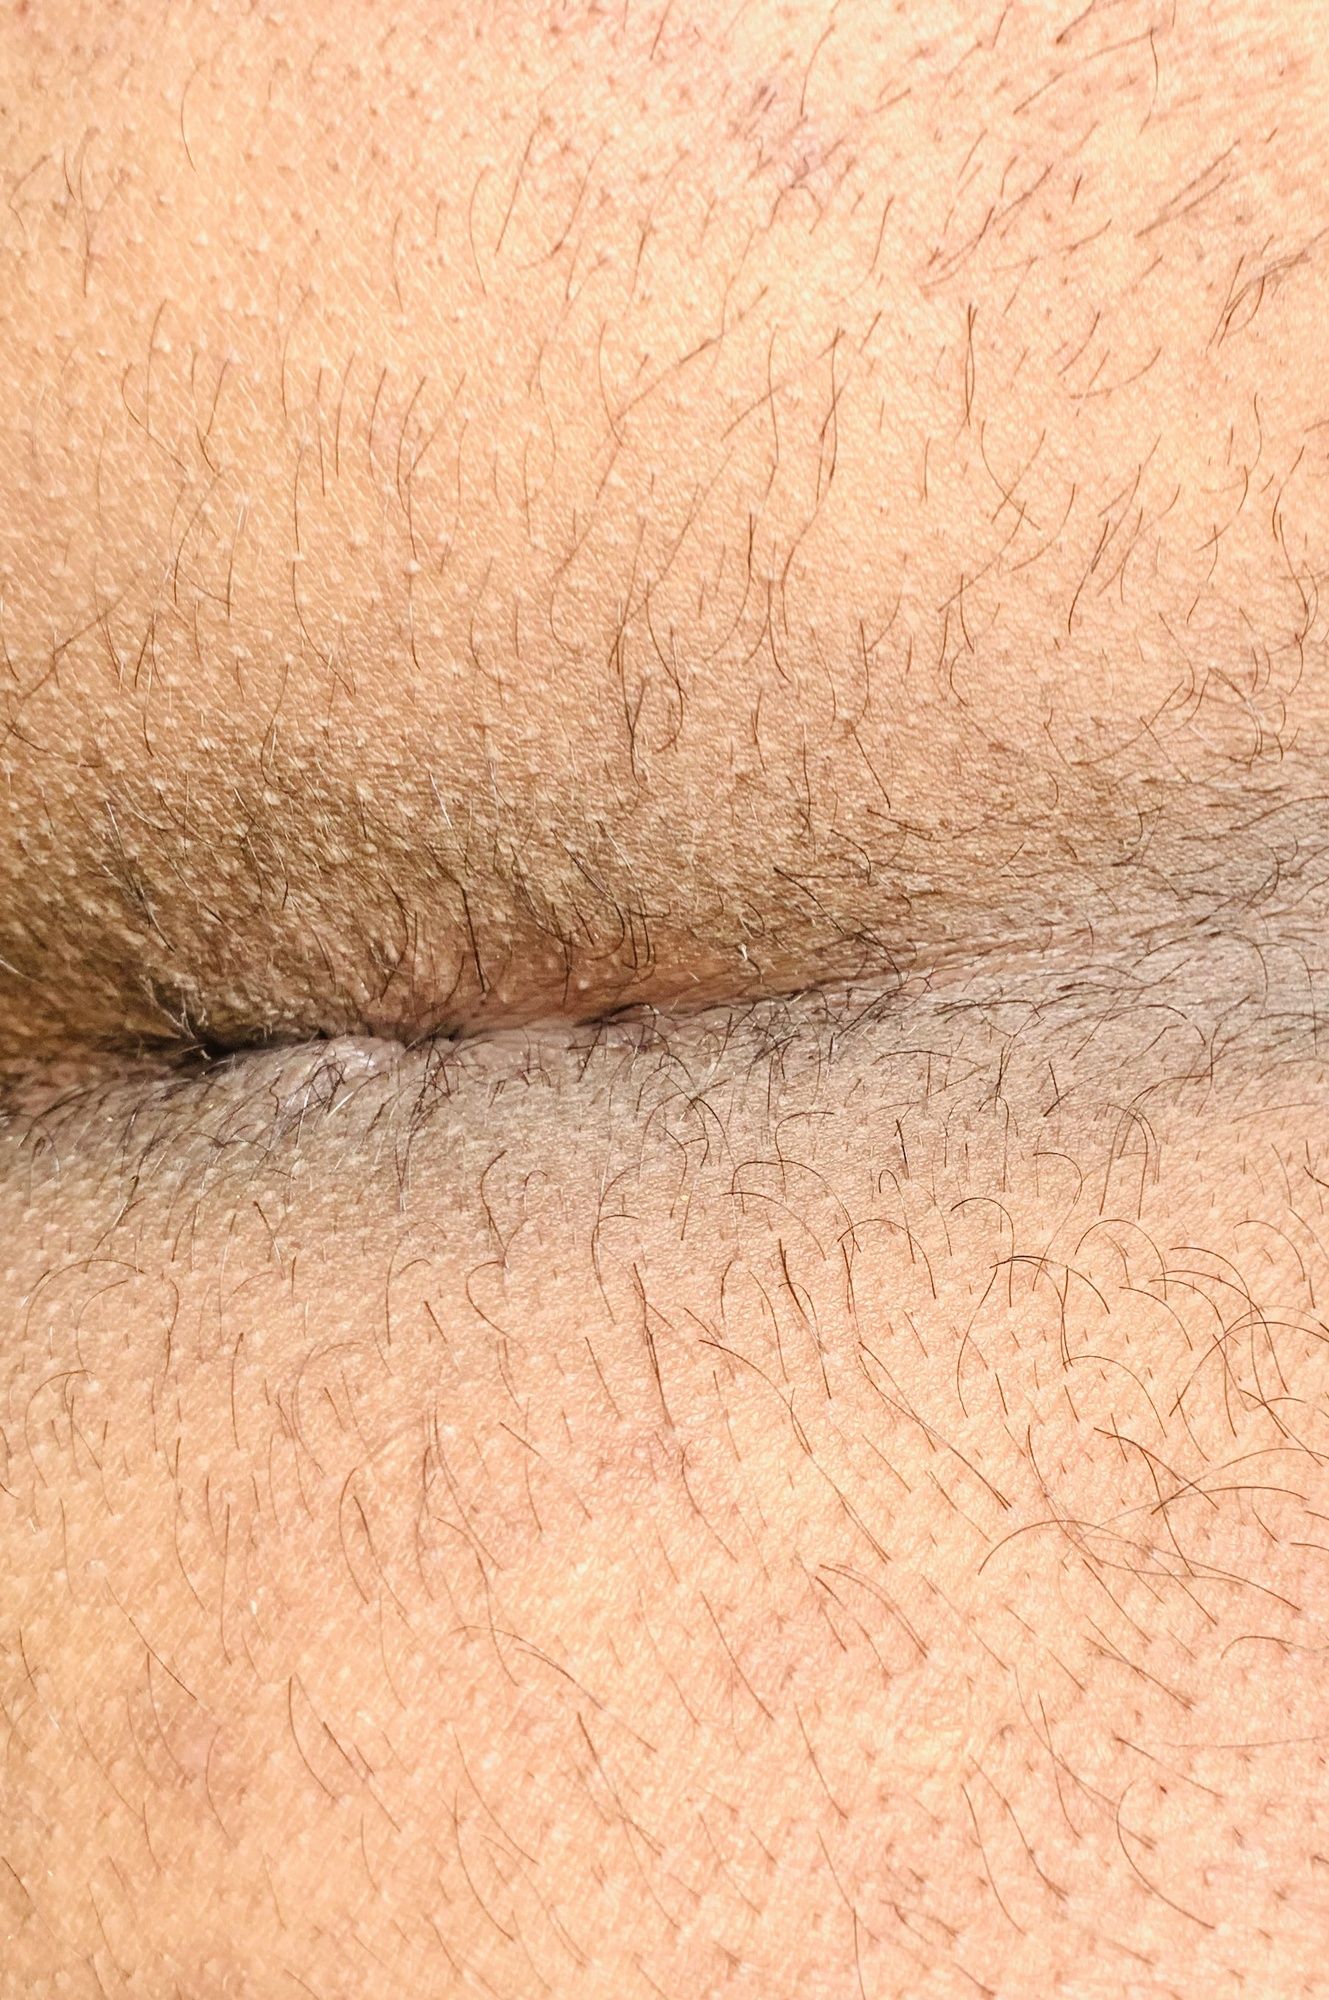 Close up Asshole #3